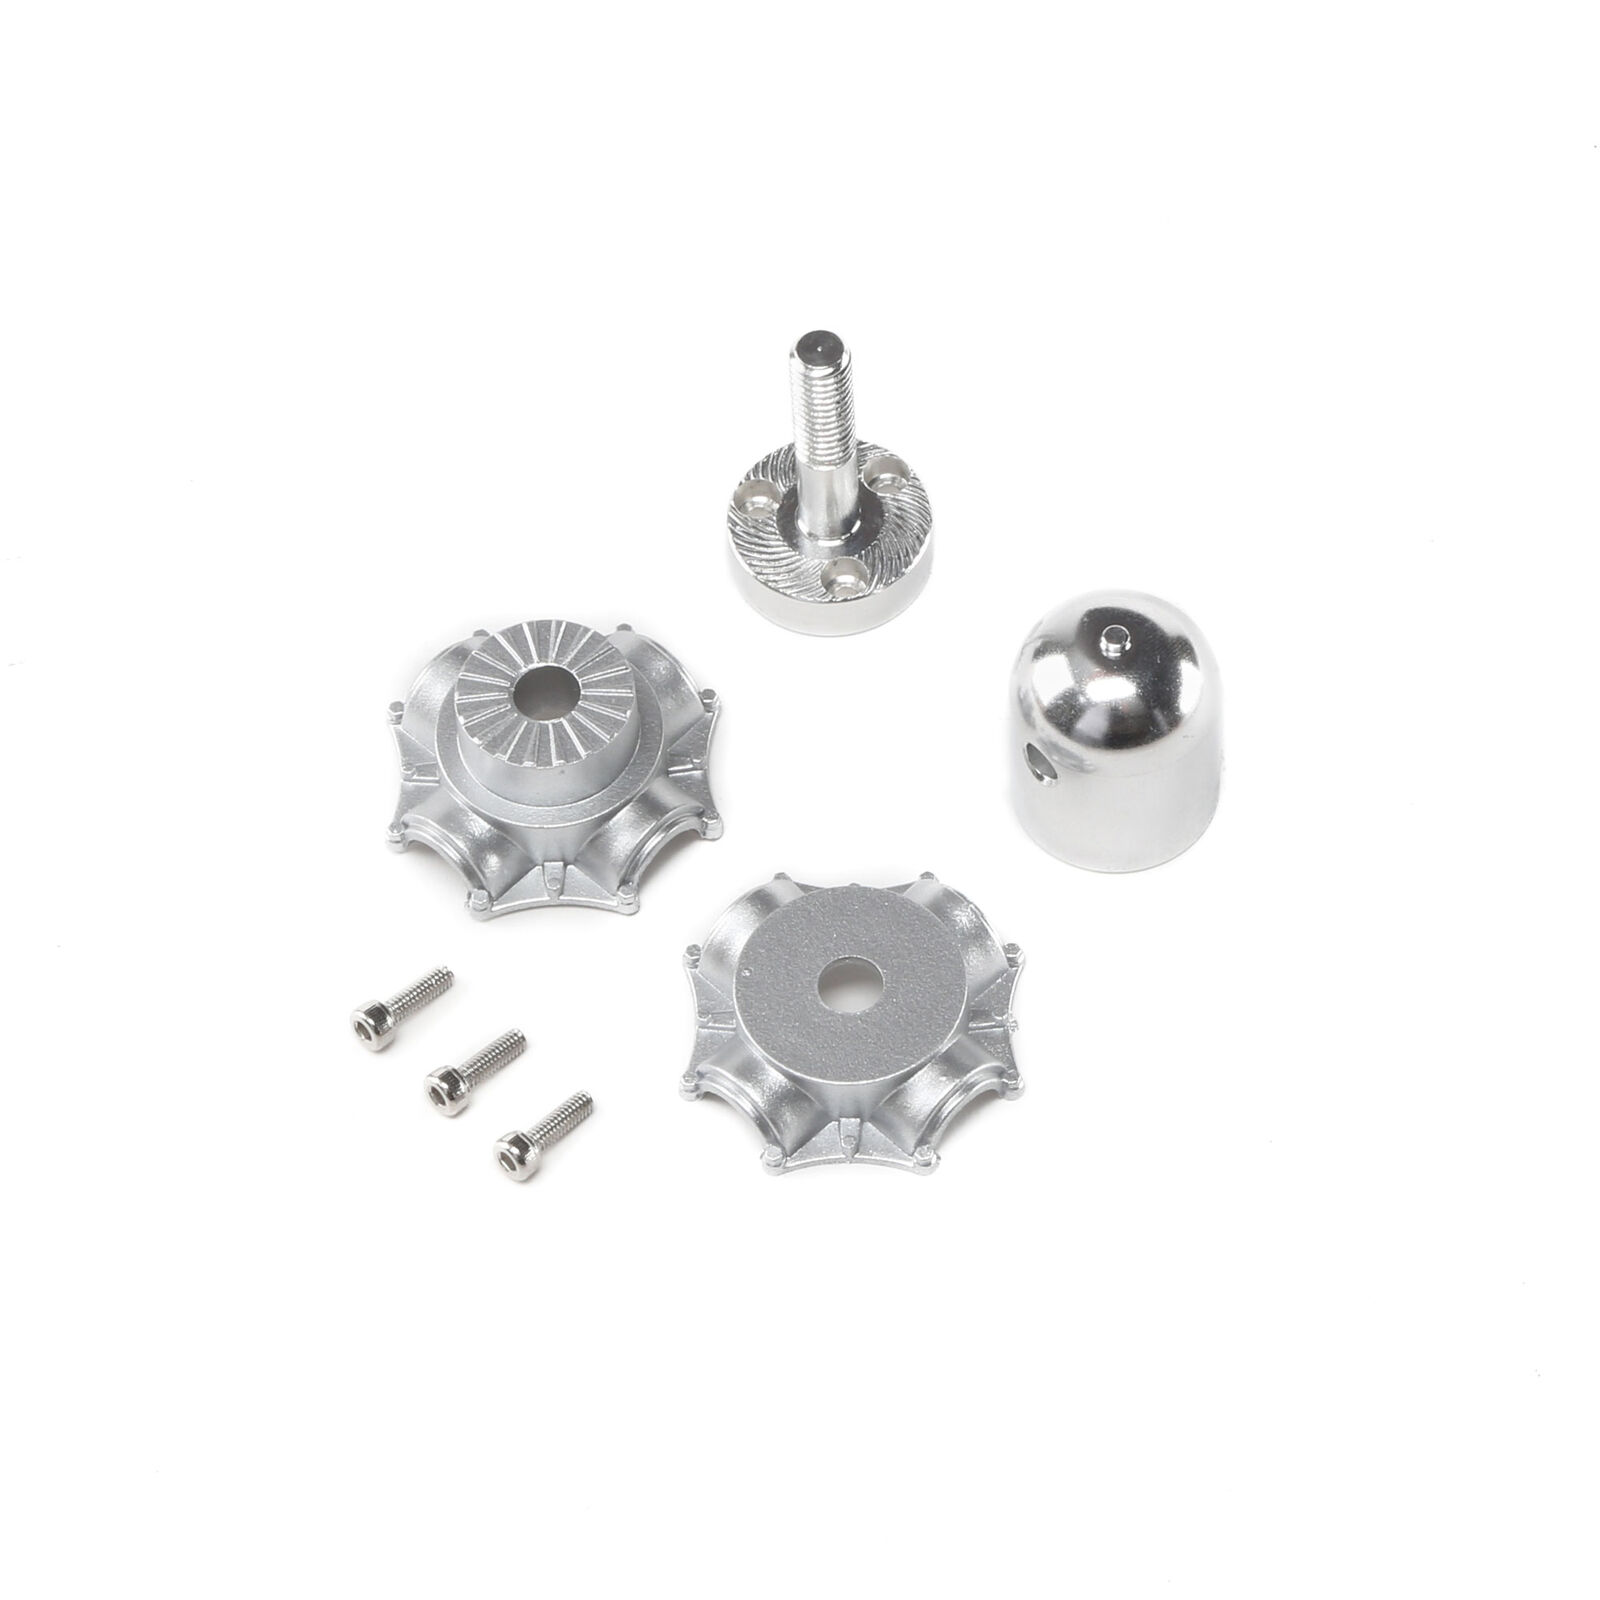 Prop Adapter, Aluminm Spinner, Plastic Hub: P-47 1.2m